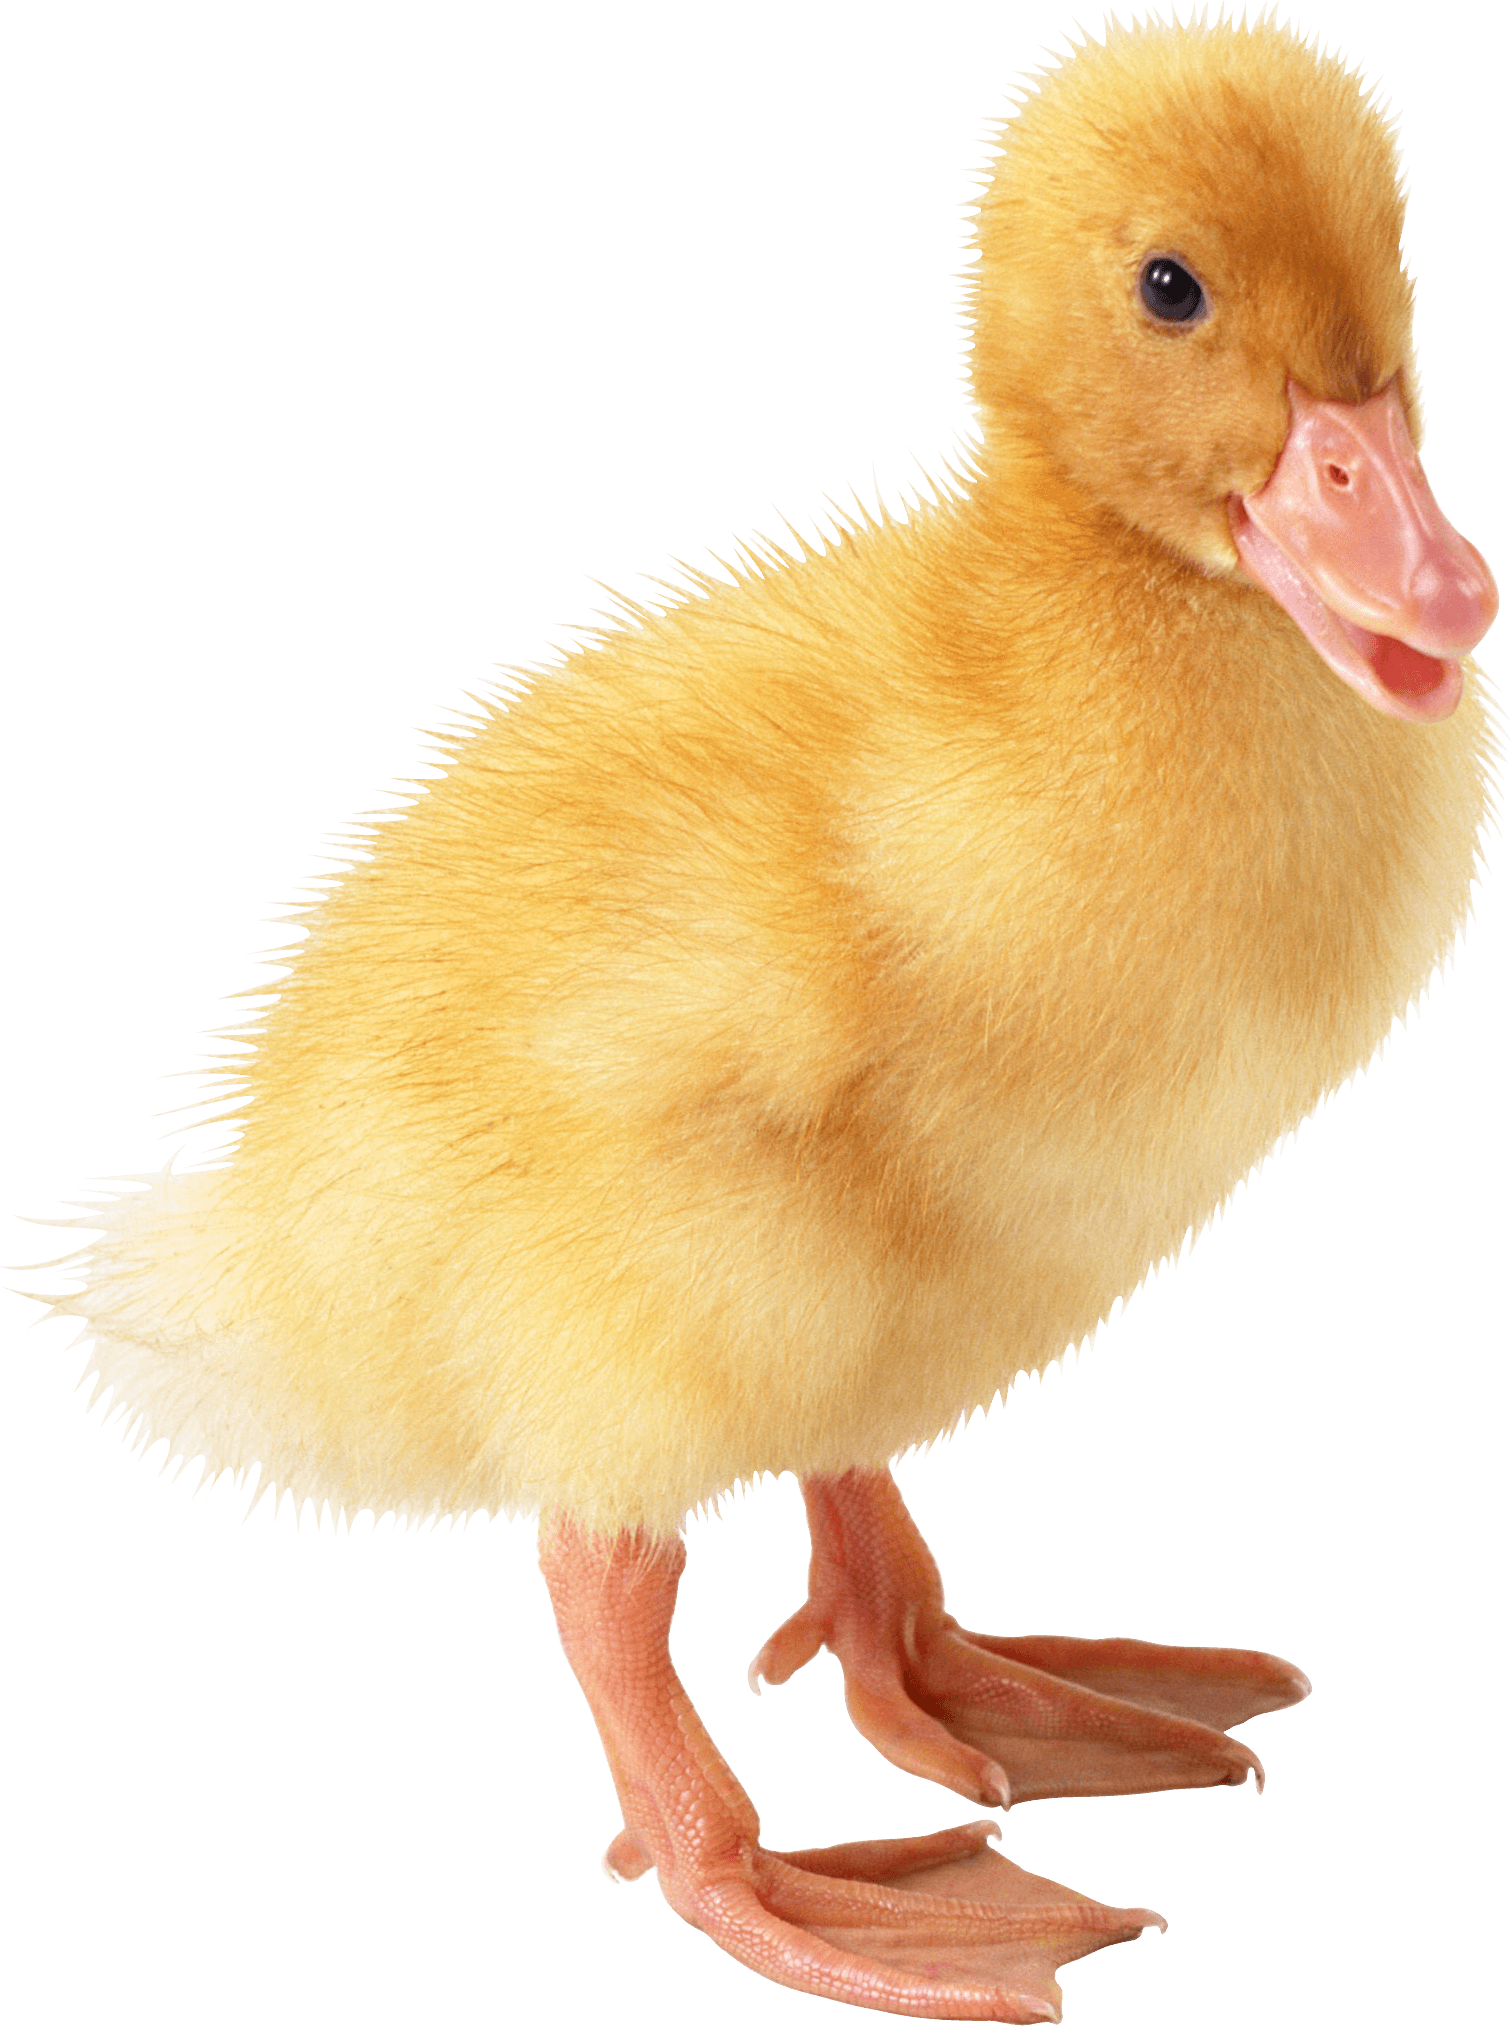 Download duck png image. Ducks clipart six little ducks